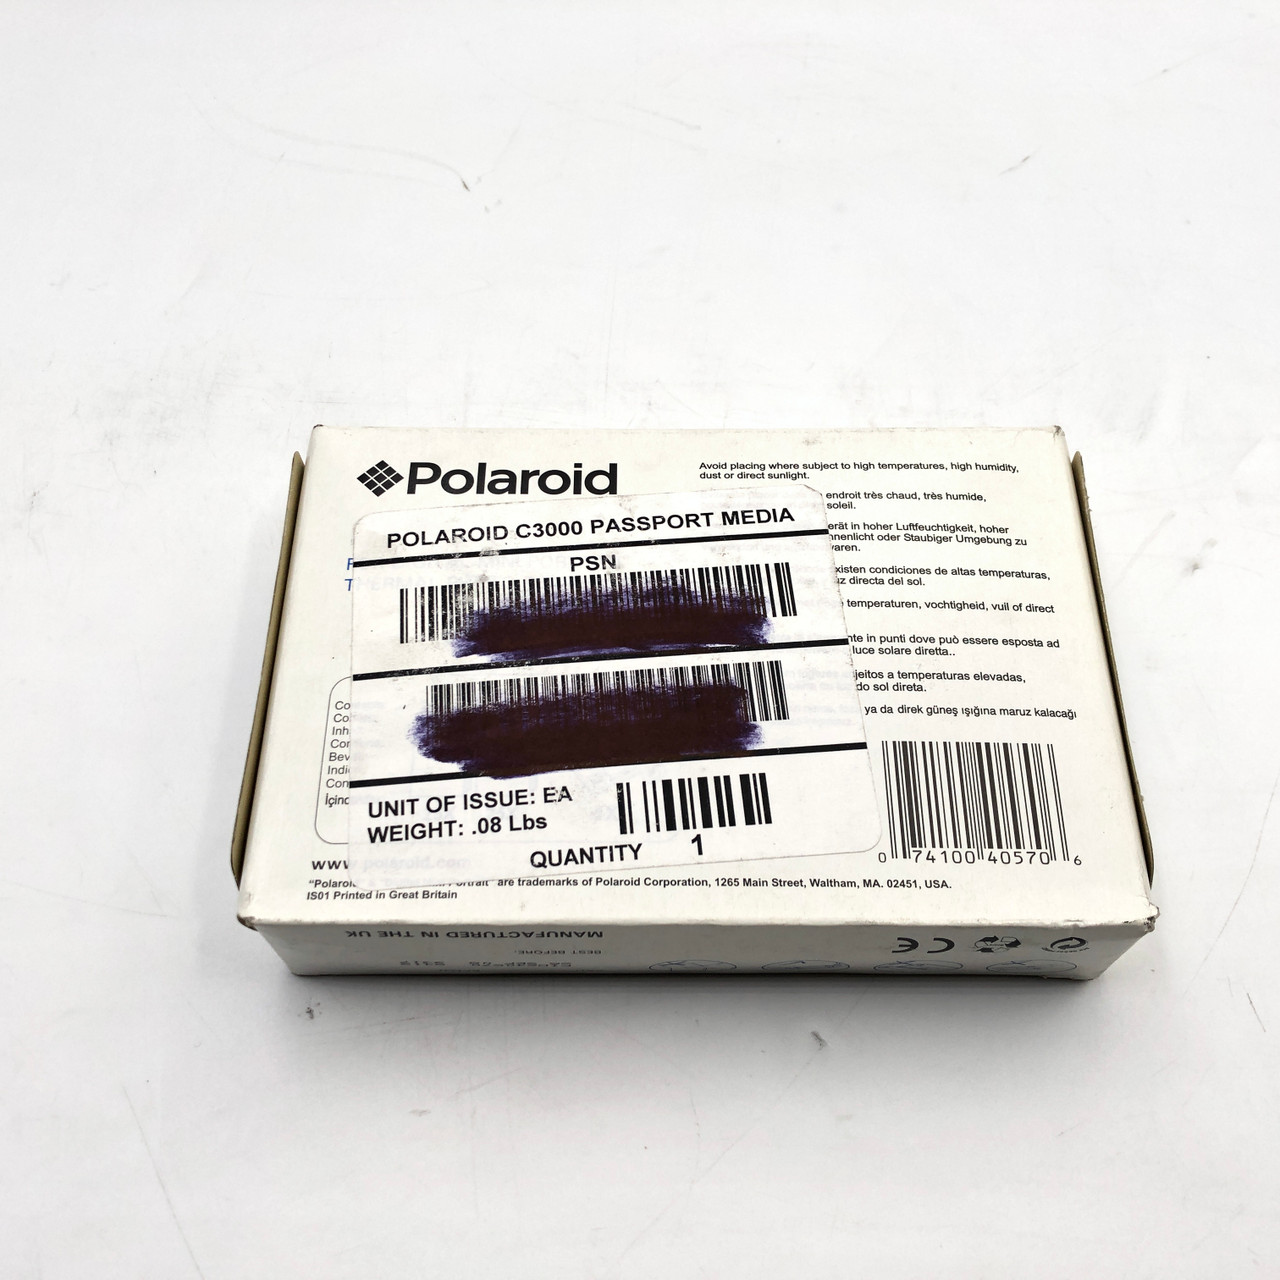 POLAROID C3000 50 SHEETS PER PACK PRINT THERMAL PHOTO PRINTS